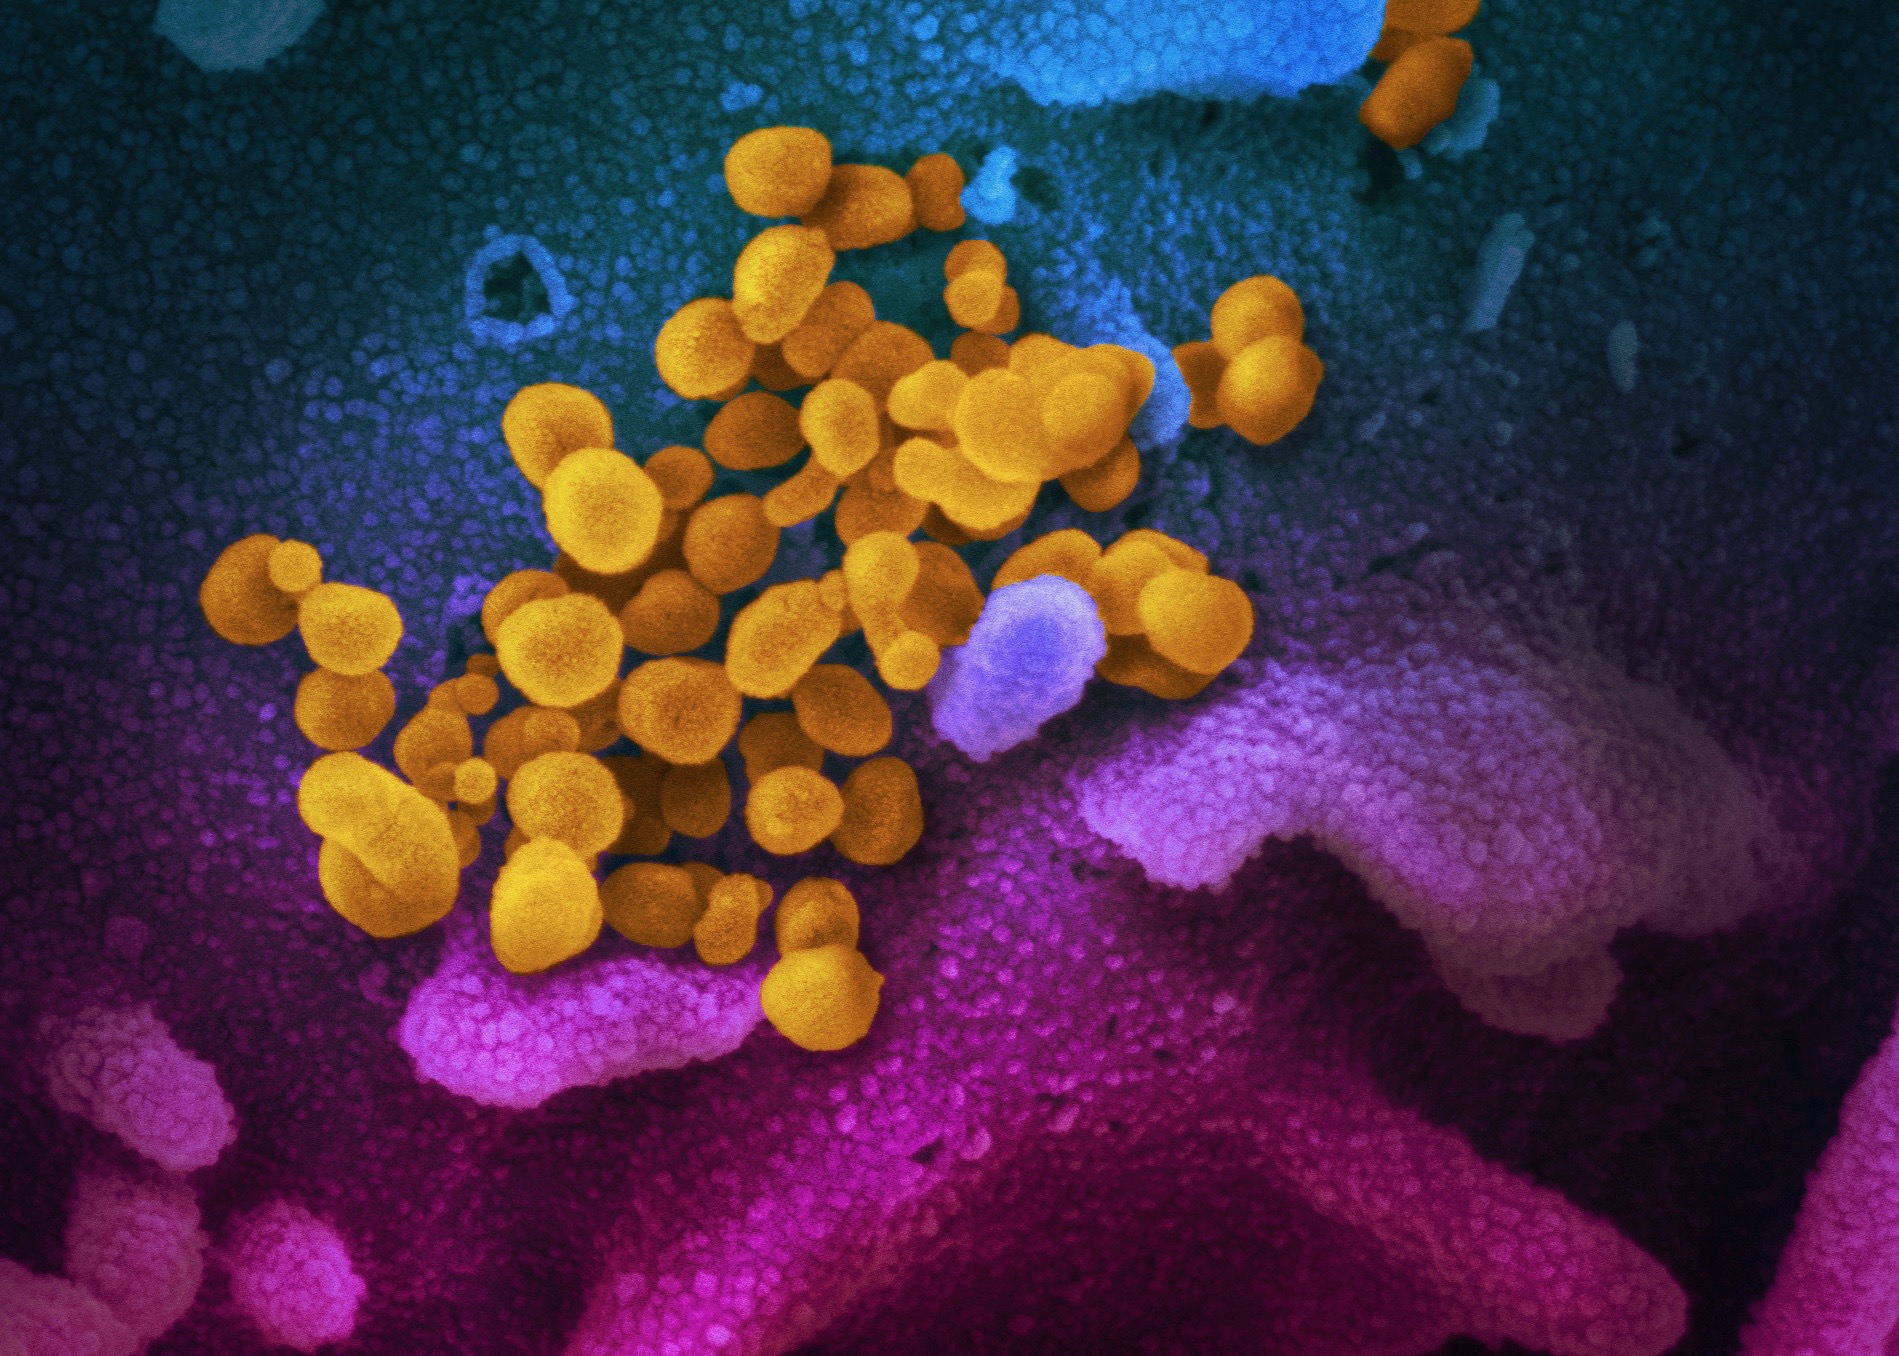 Microscopy image of the SARS-CoV-2 virus